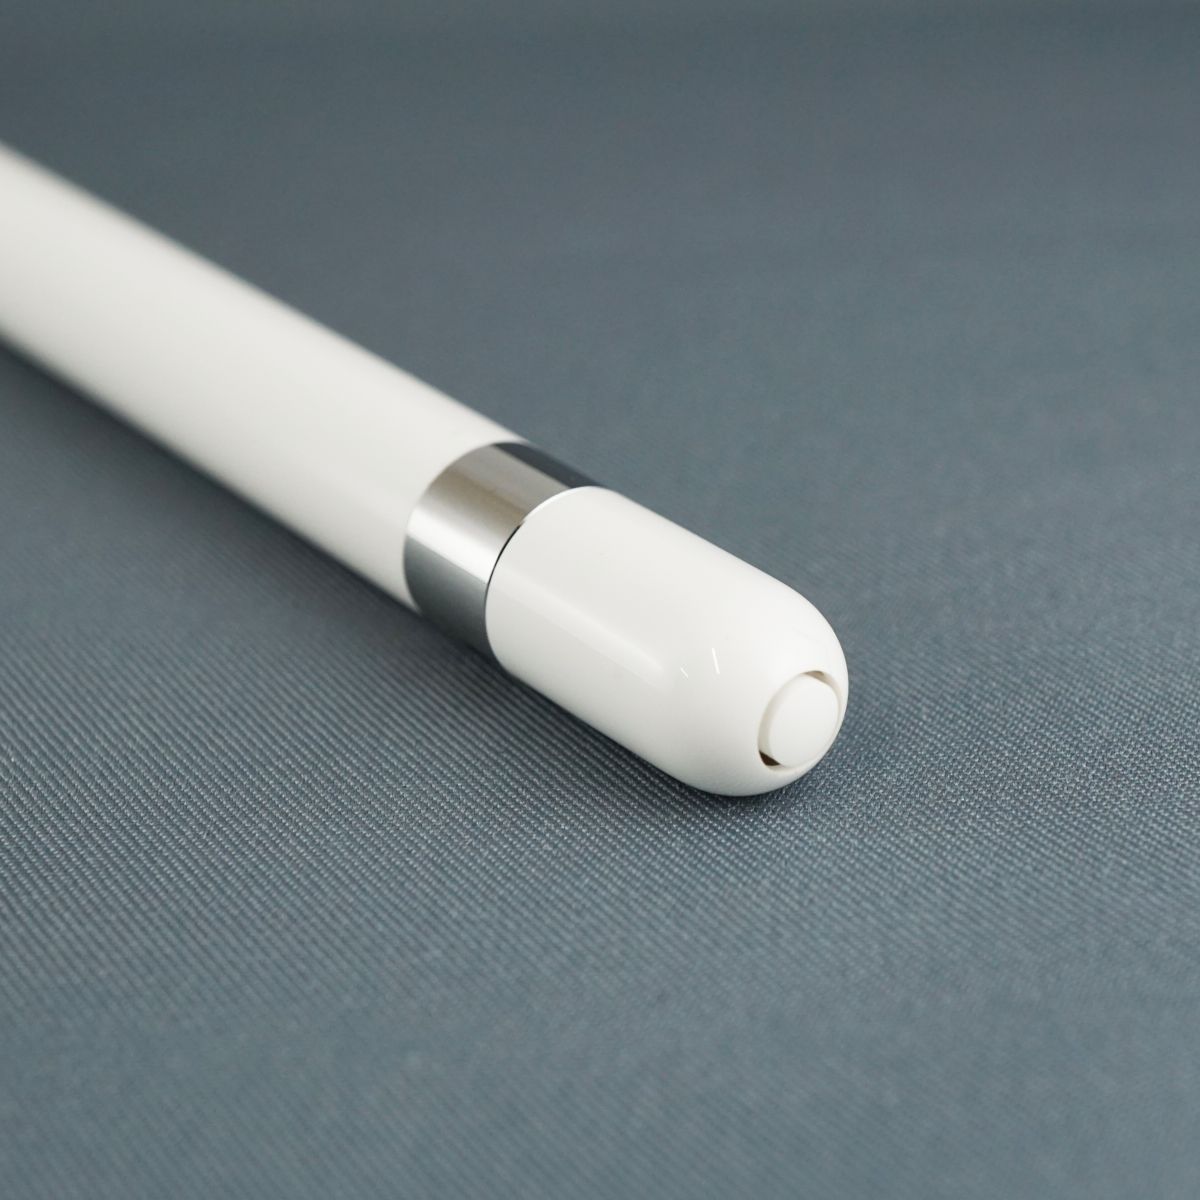 Apple Pencil アップルペンシル USED美品 本体のみ 第一世代 A1603 MK0C2J/A 完動品 安心保証 即日発送 KR V9015